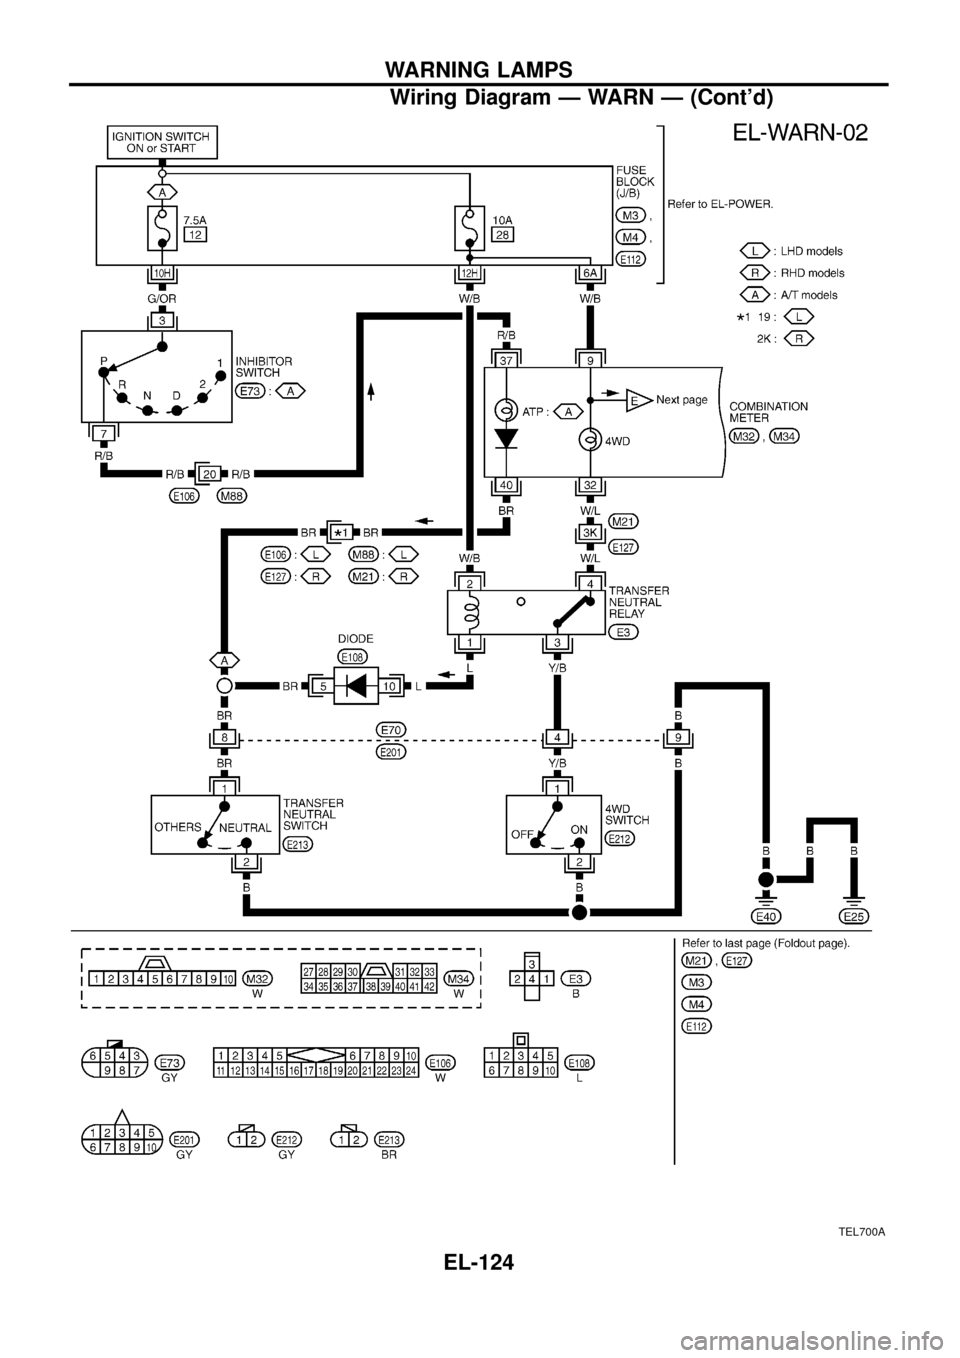 NISSAN PATROL 1998 Y61 / 5.G Electrical System User Guide TEL700A
WARNING LAMPS
Wiring Diagram Ð WARN Ð (Contd)
EL-124 